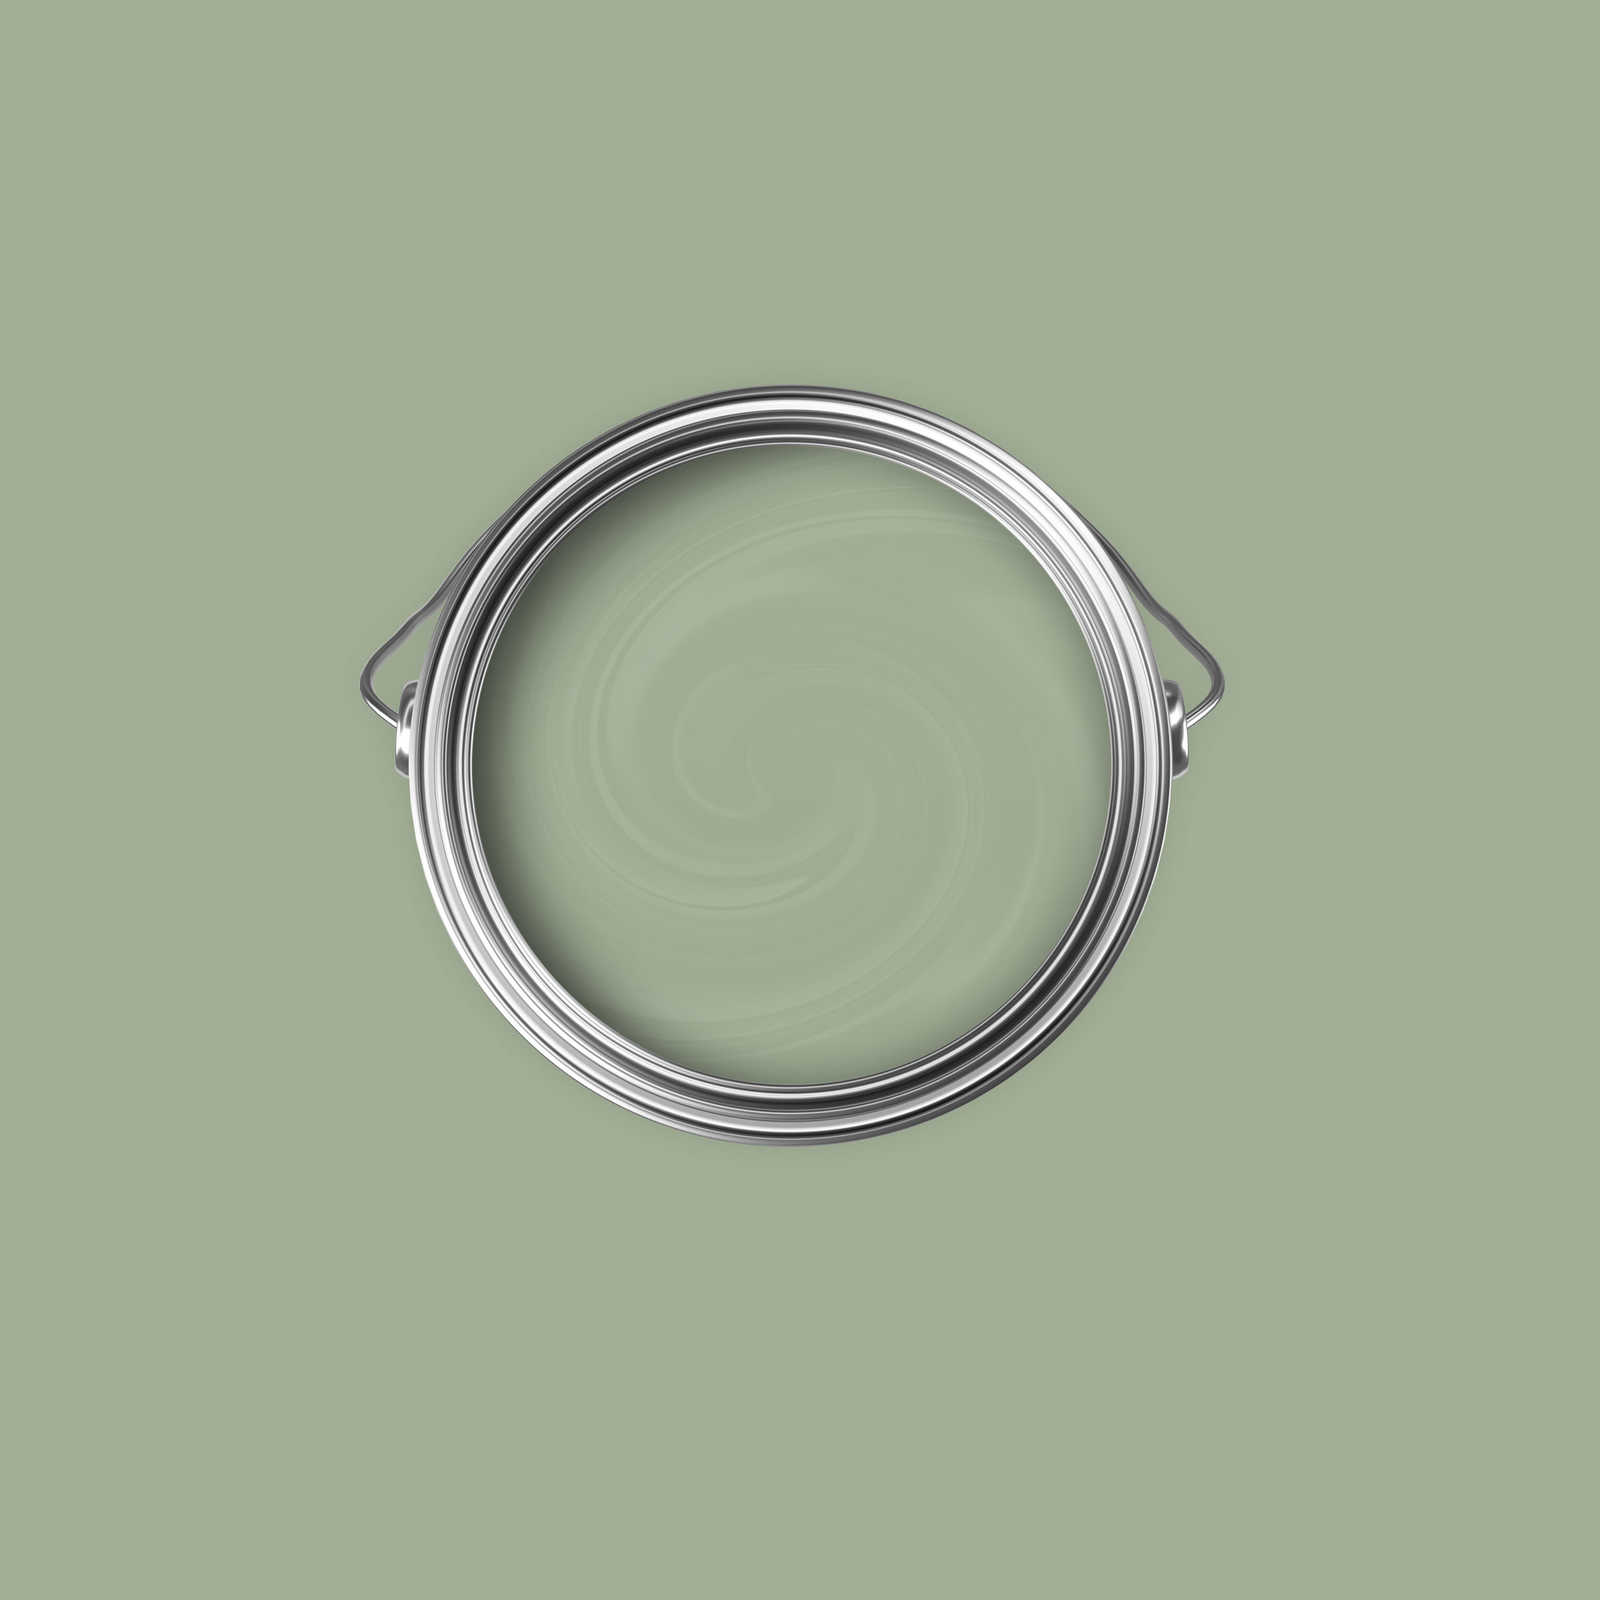             Pintura mural Premium verde oliva terroso »Gorgeous Green« NW502 – 2,5 litro
        